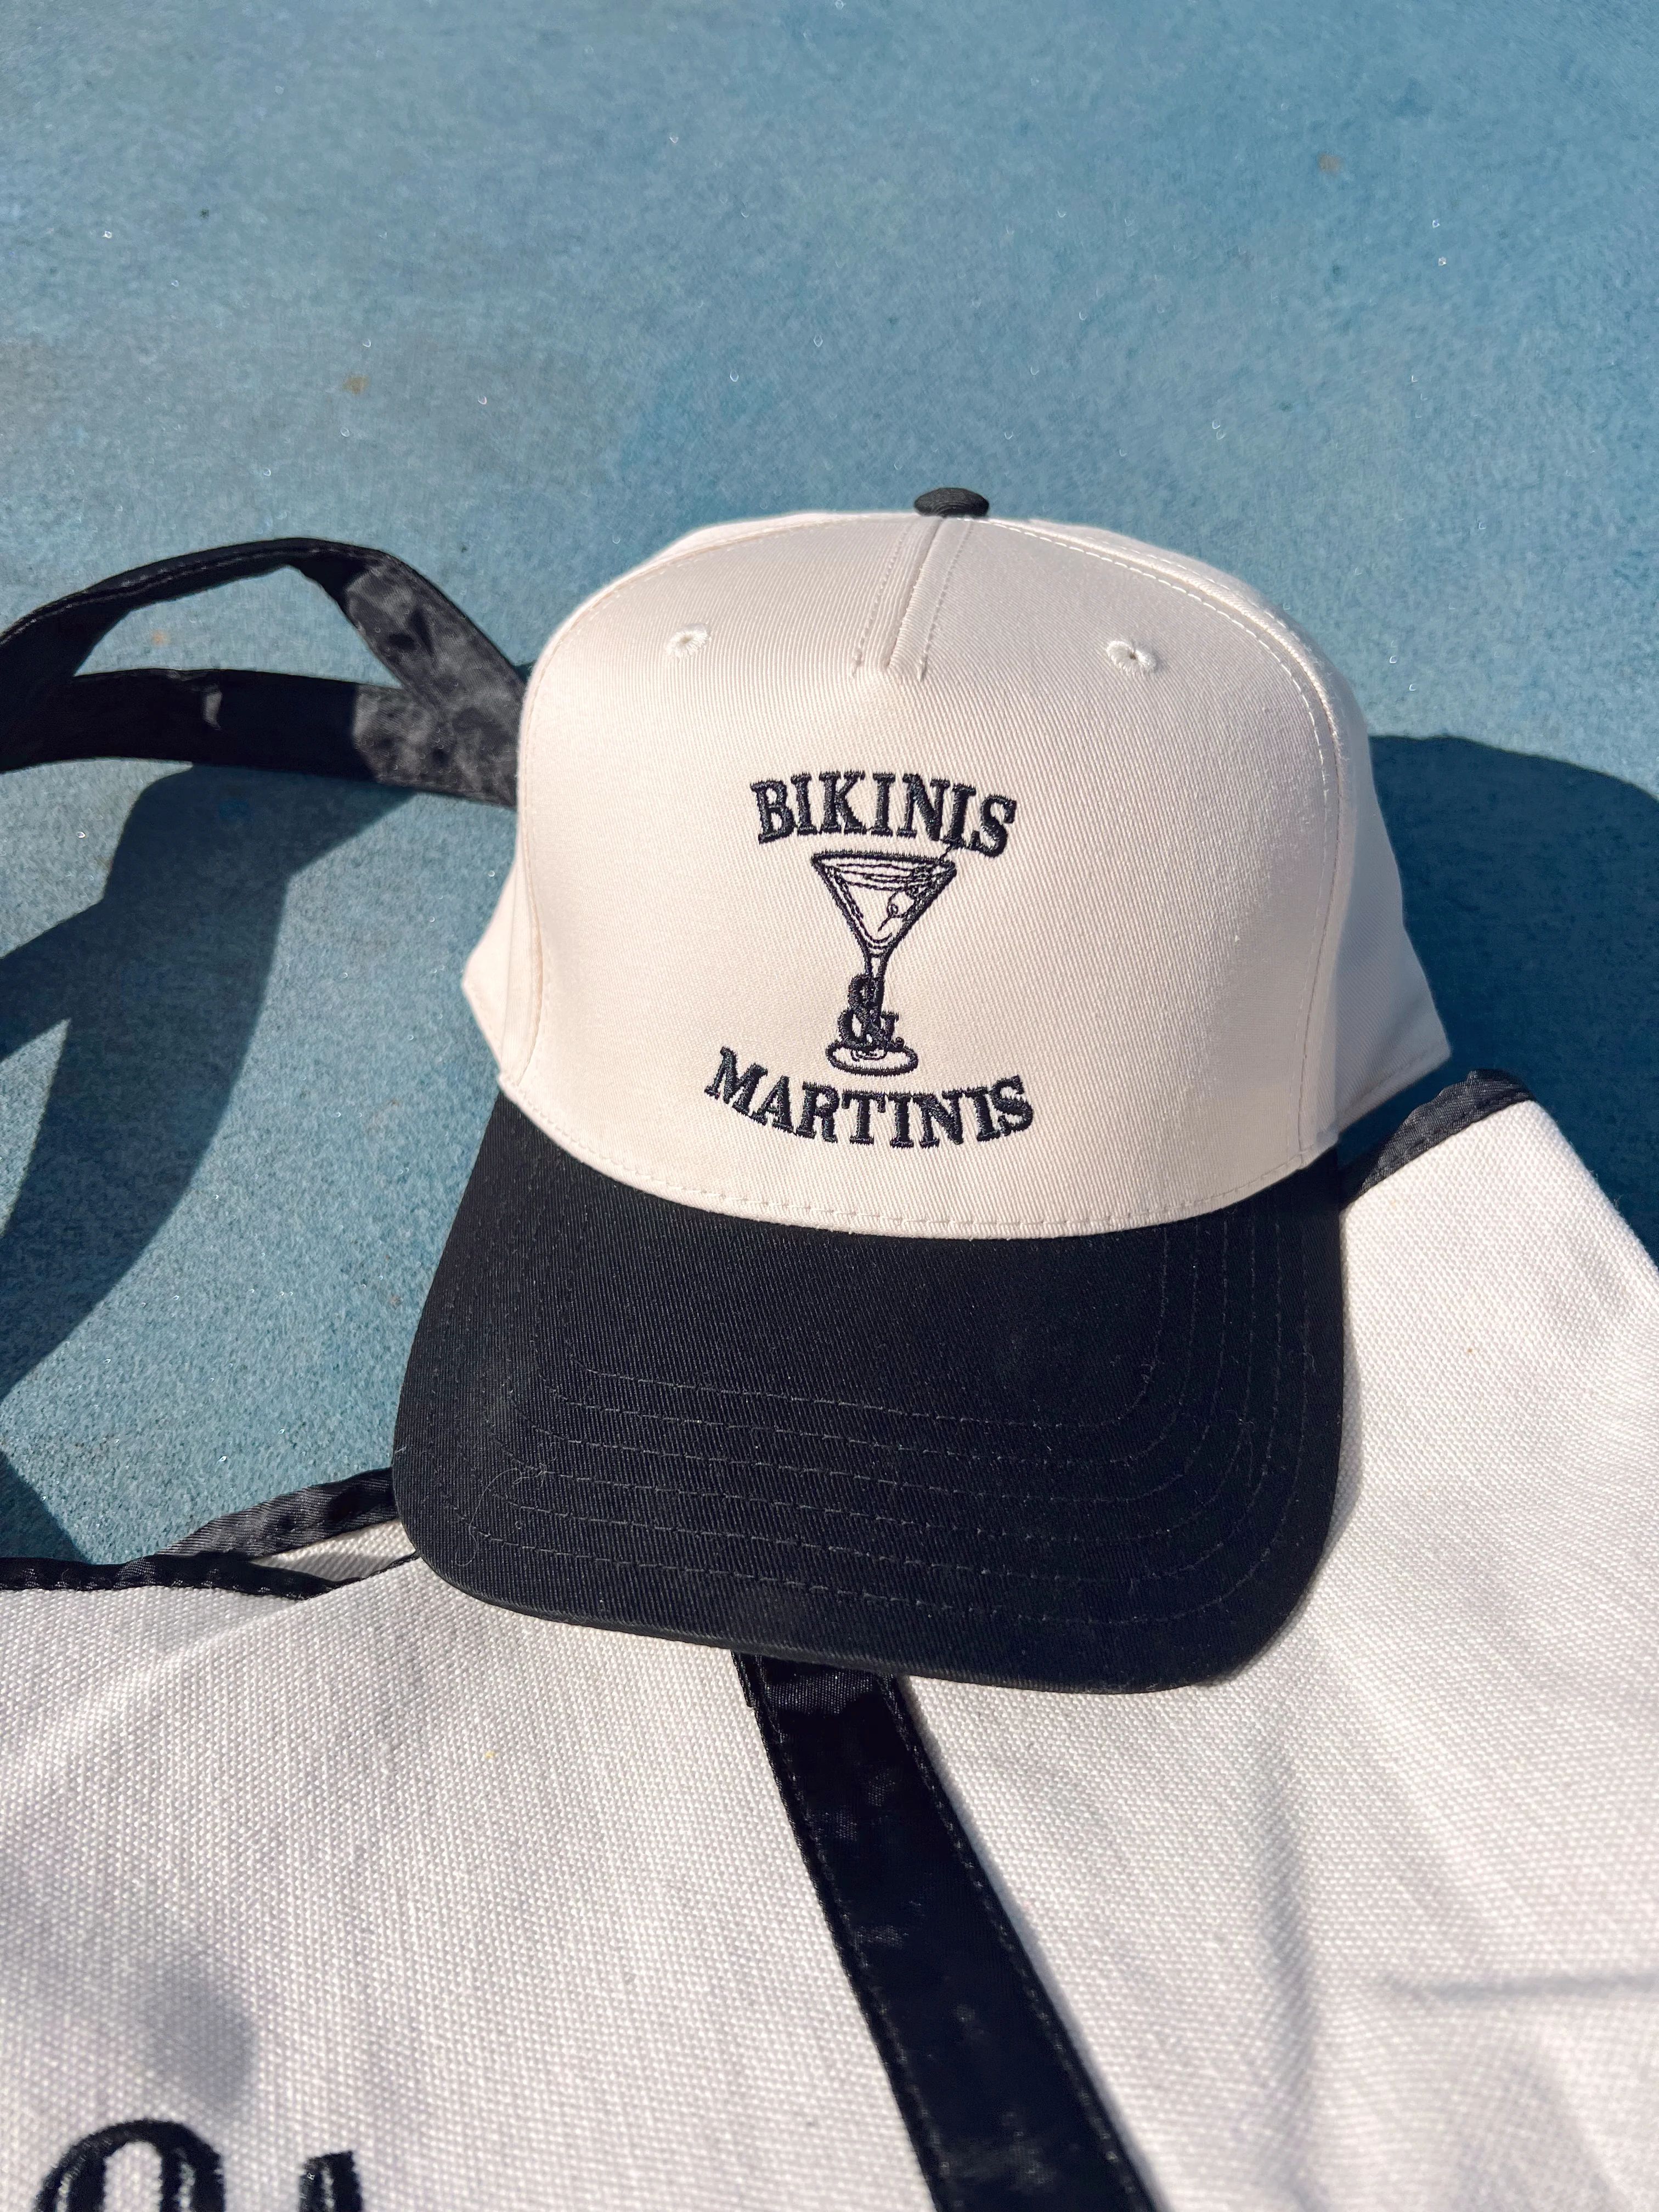 Bikinis & Martinis Vintage Trucker Hat | KenzKustomz